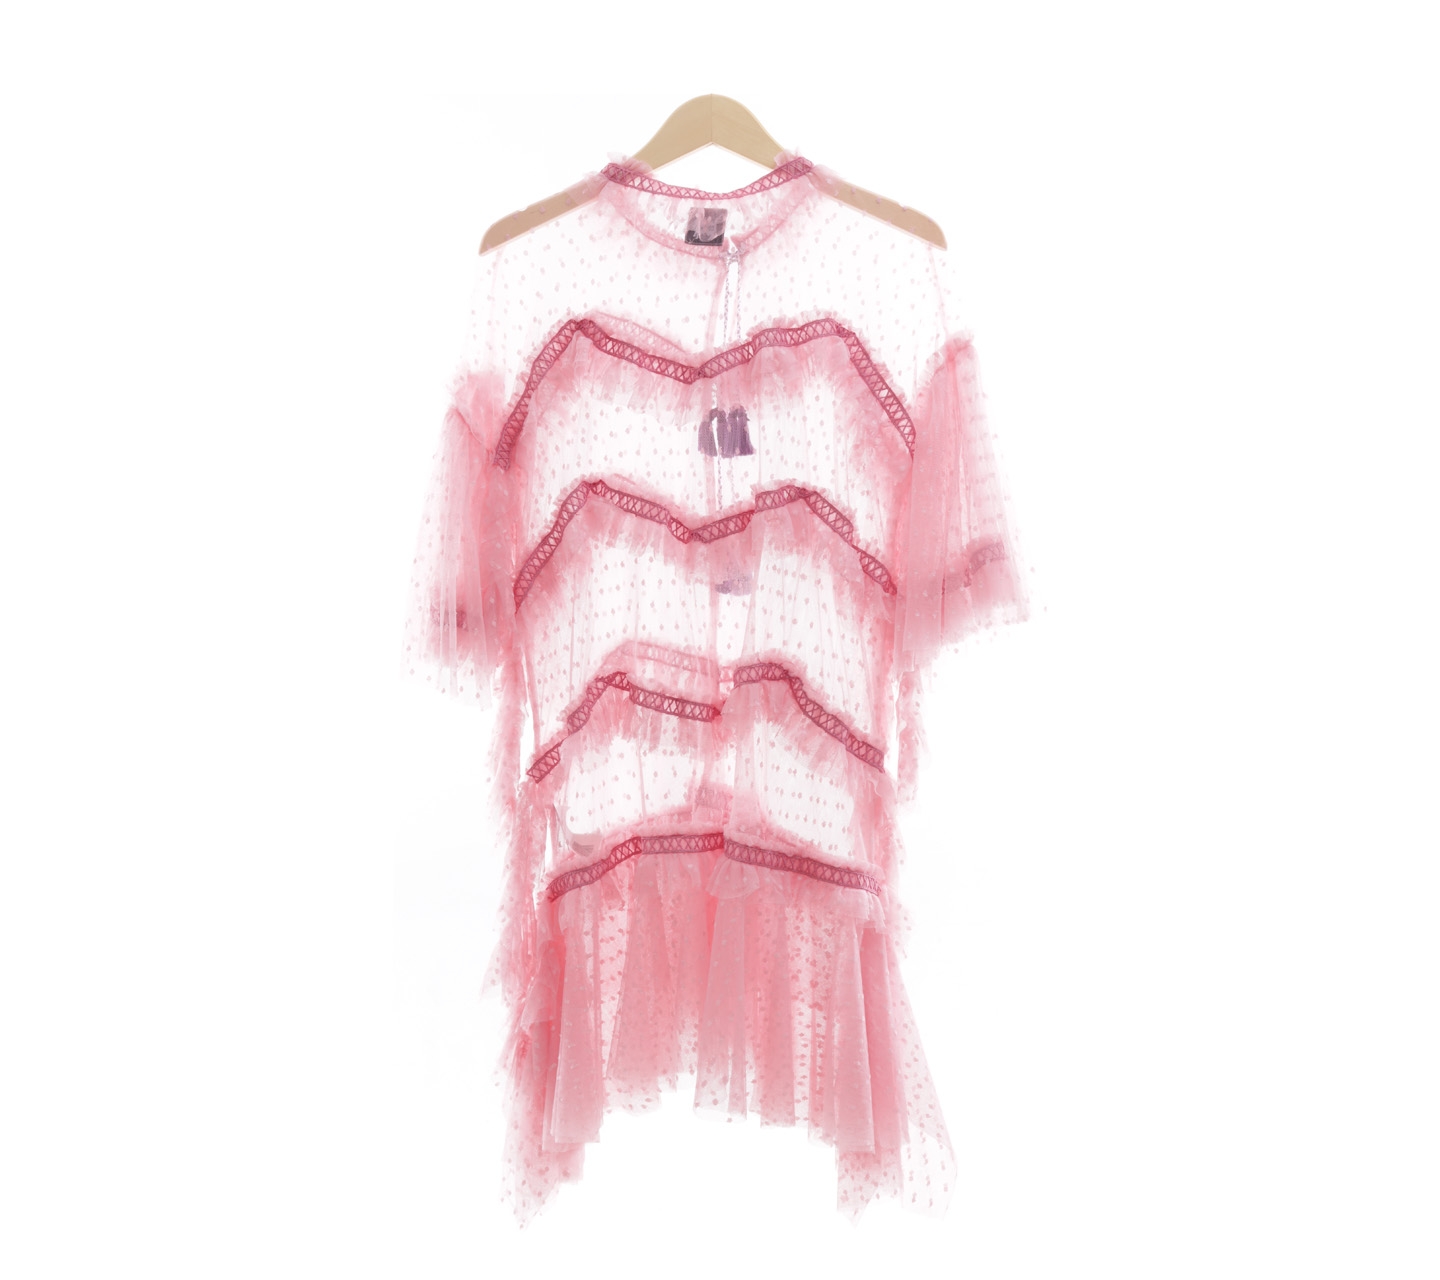 Douche Pink Seethrough Outerwear